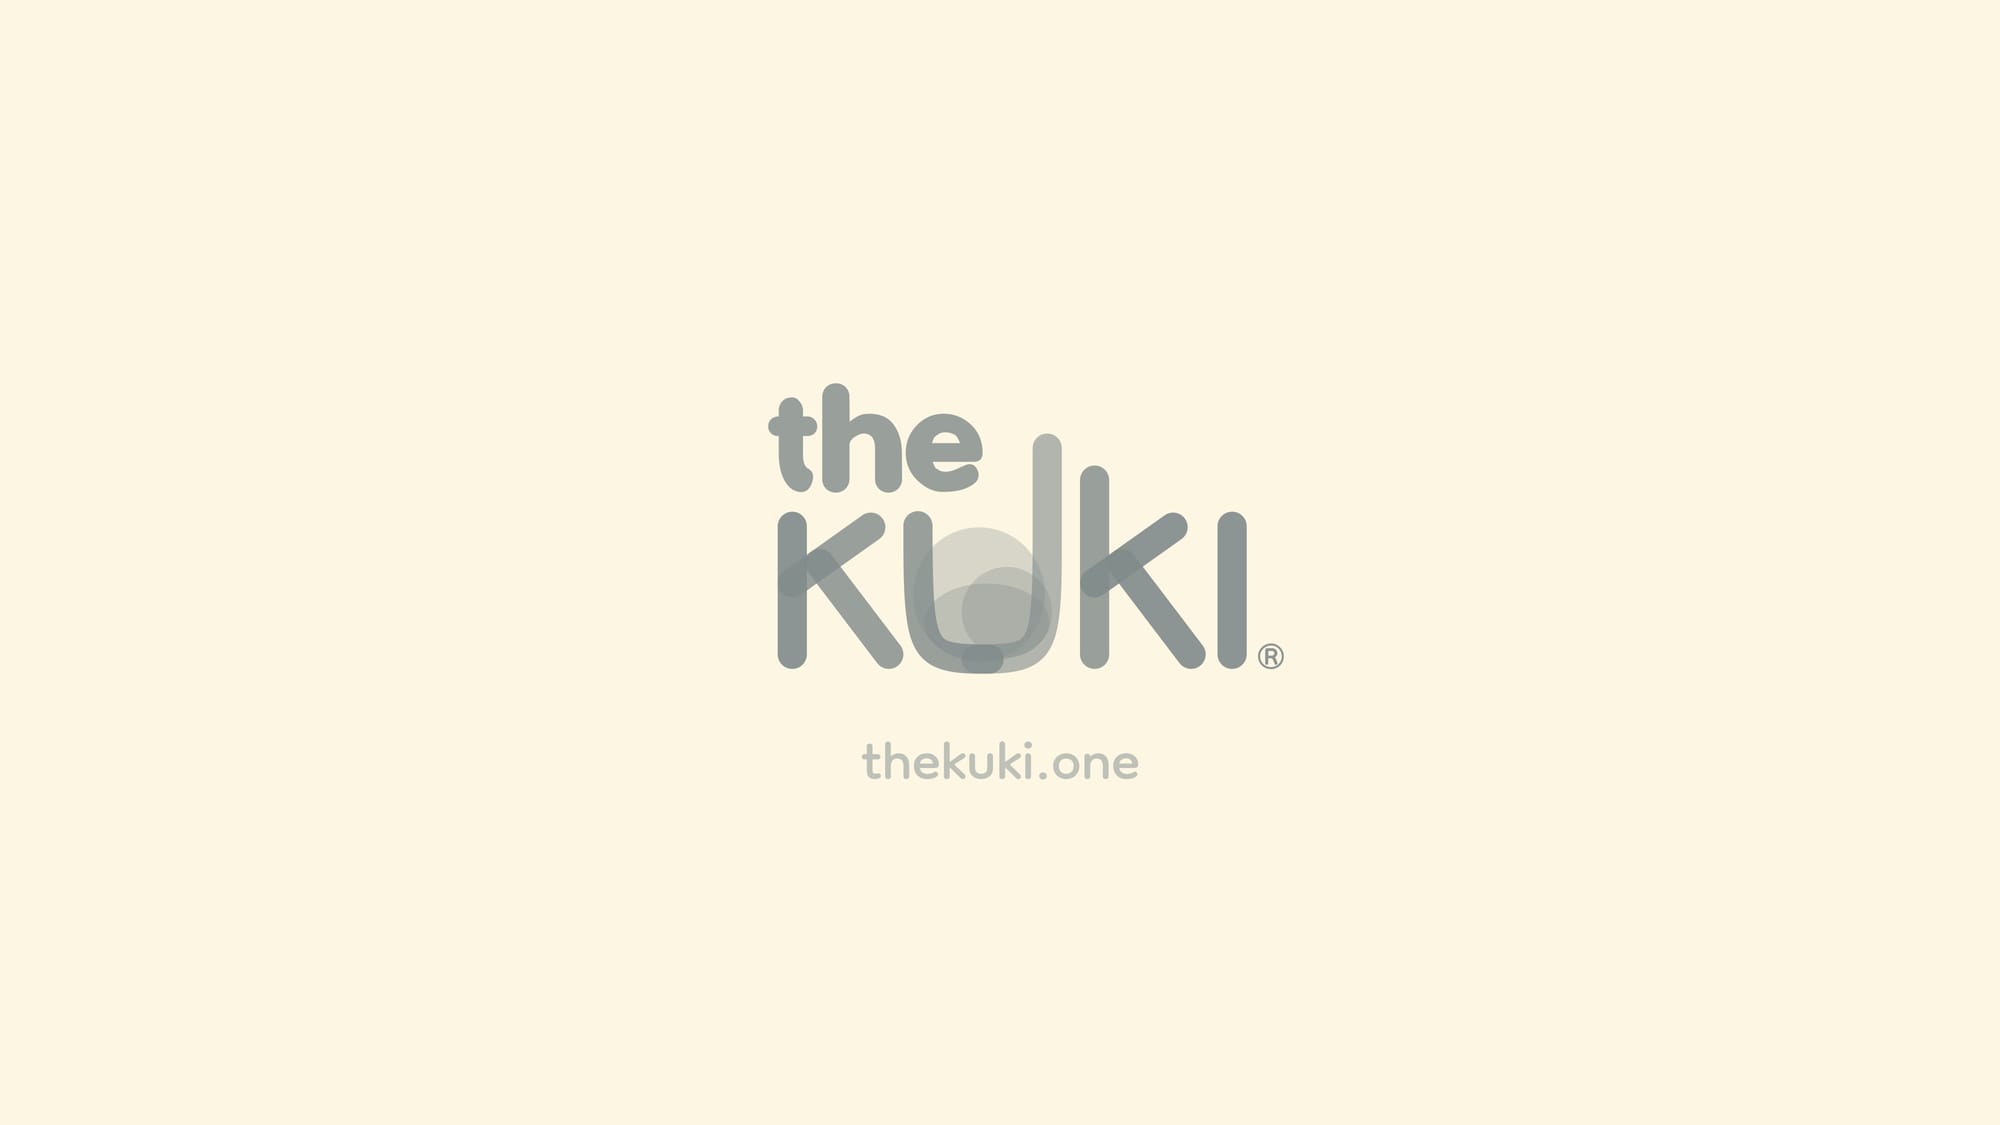 The Kuki® post image